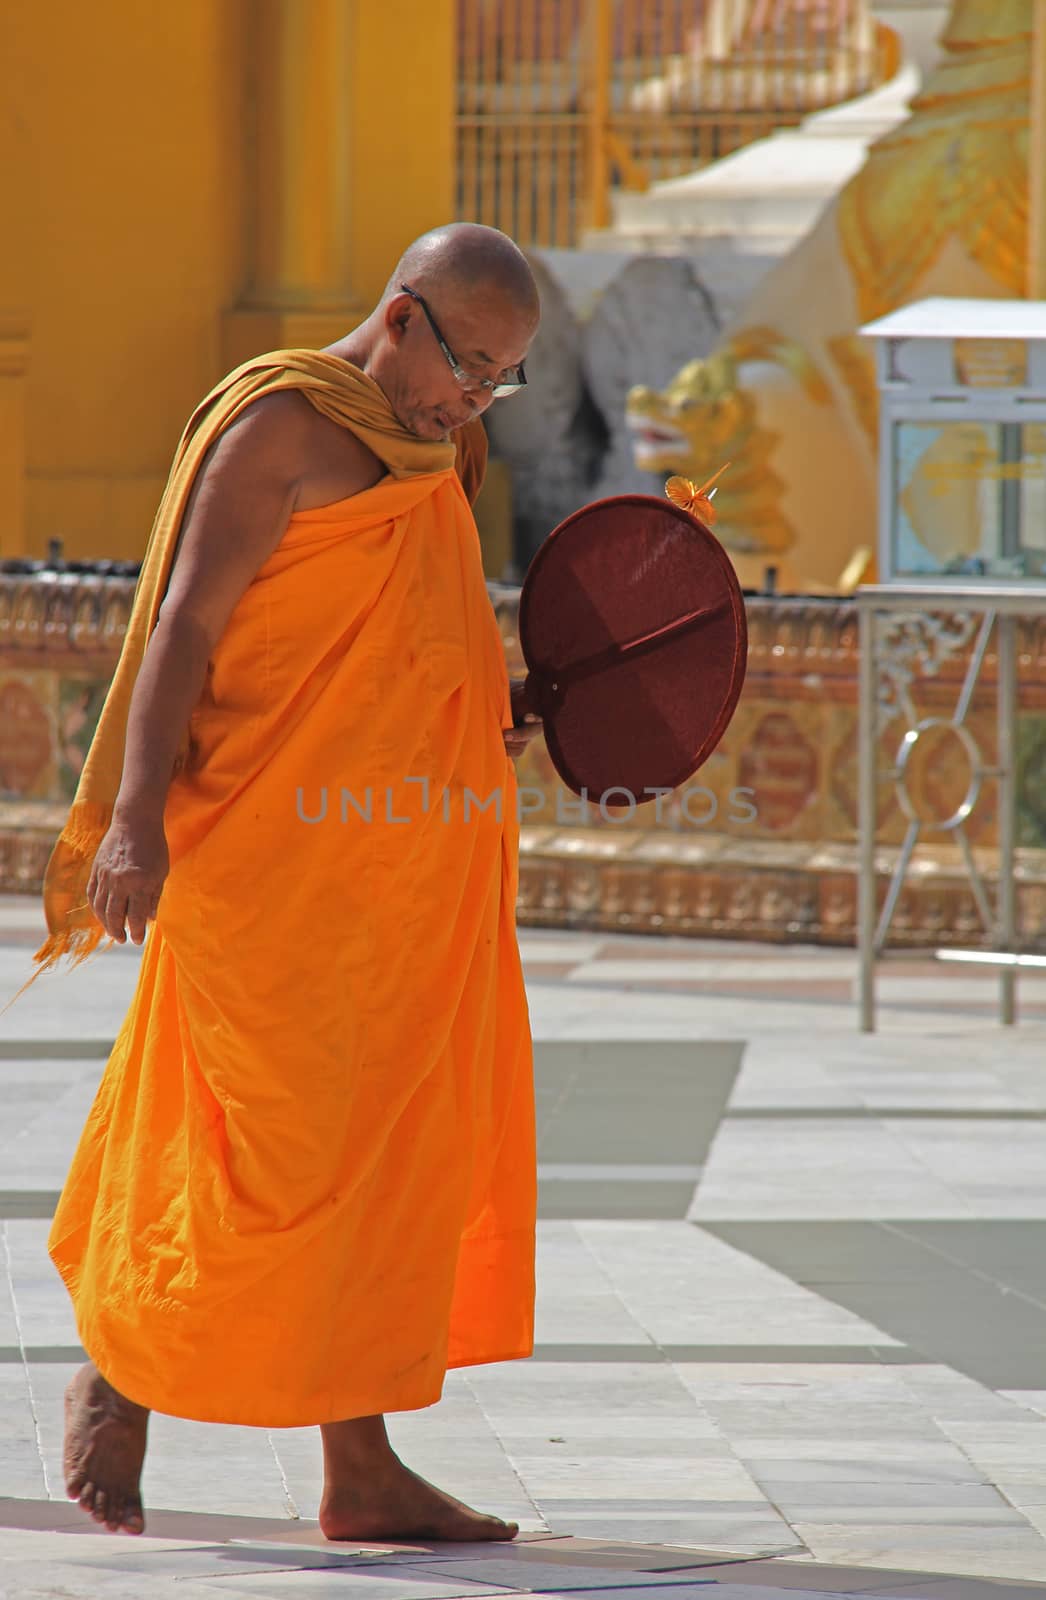 Buddhist Monk by photocdn39